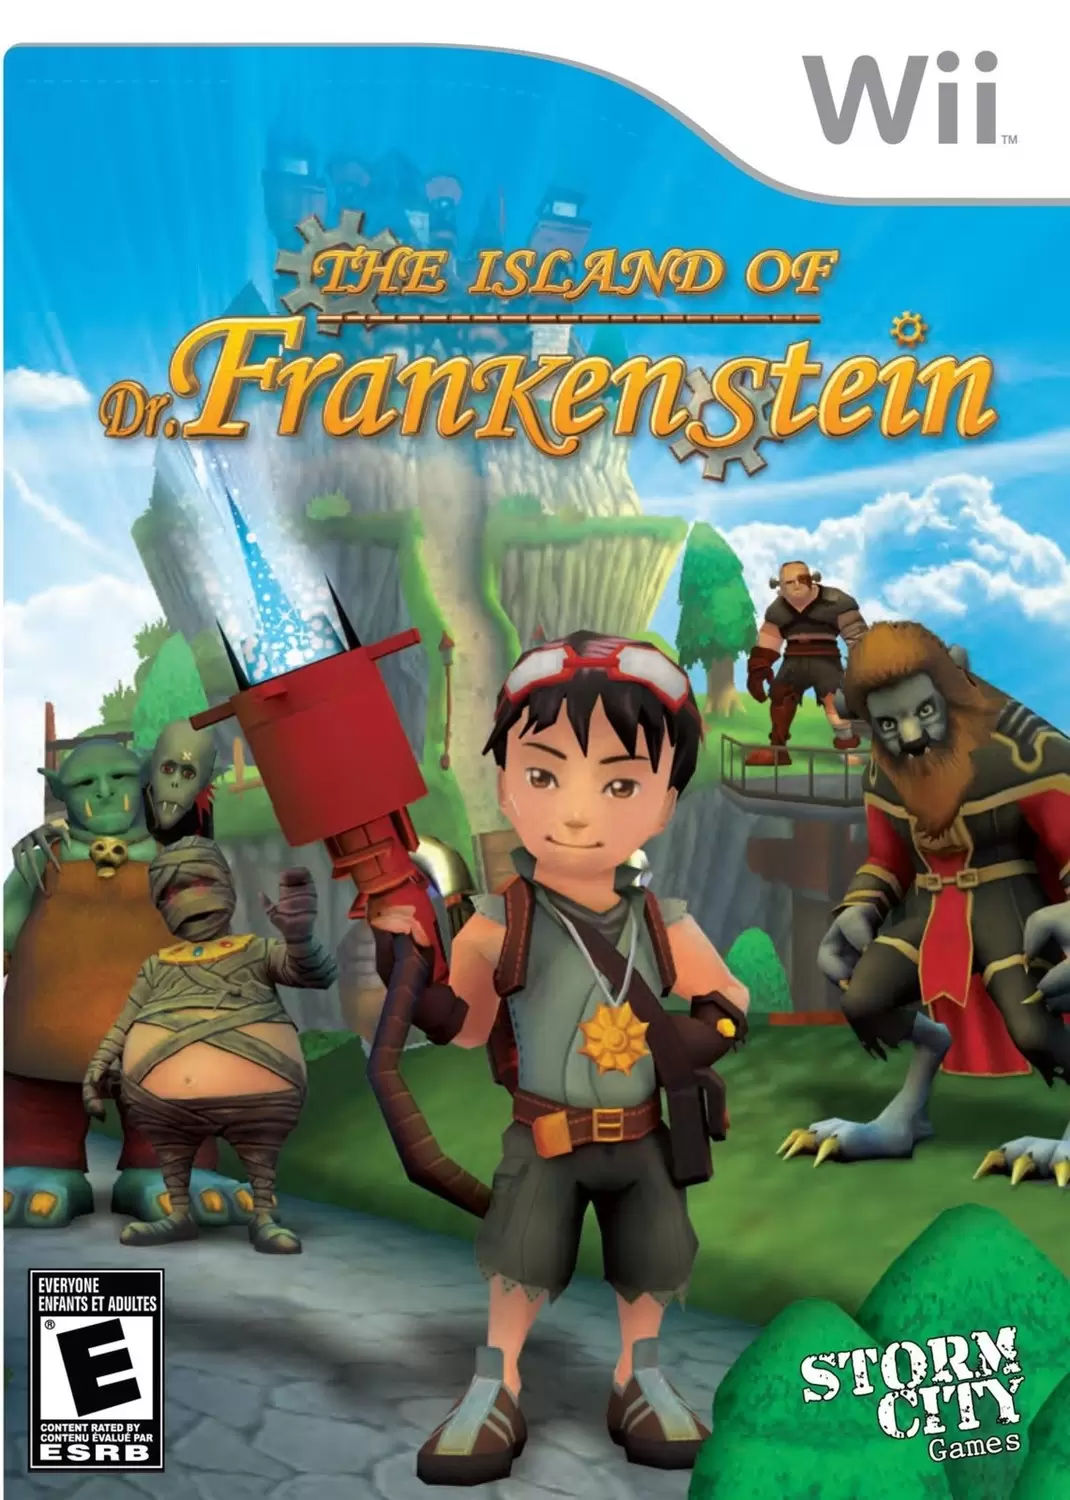 Nintendo Wii Games - The Island of Dr. Frankenstein